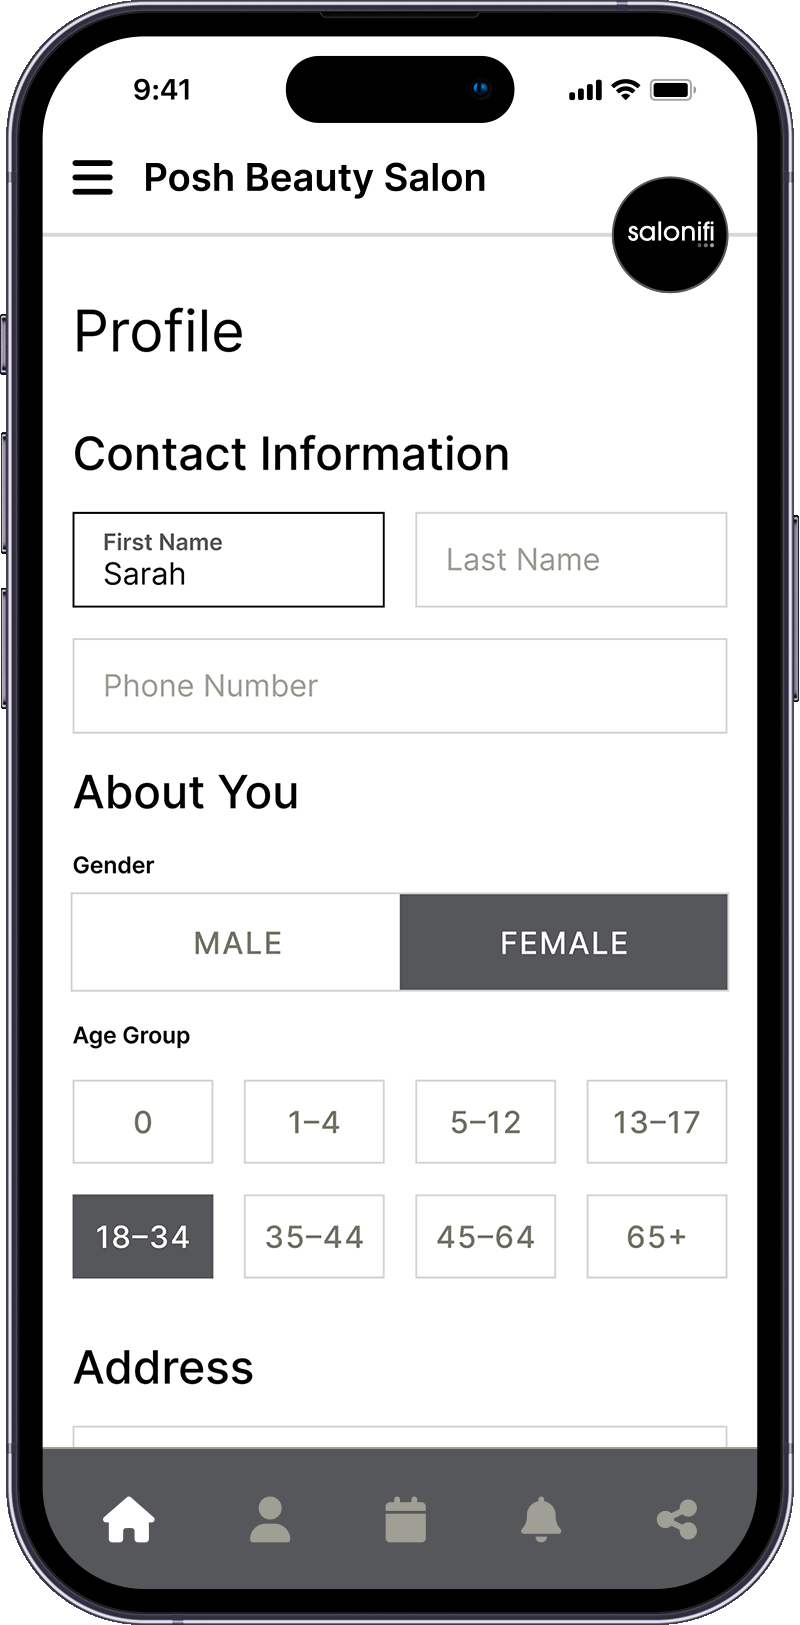 Salonifi redesigned booking profile UI